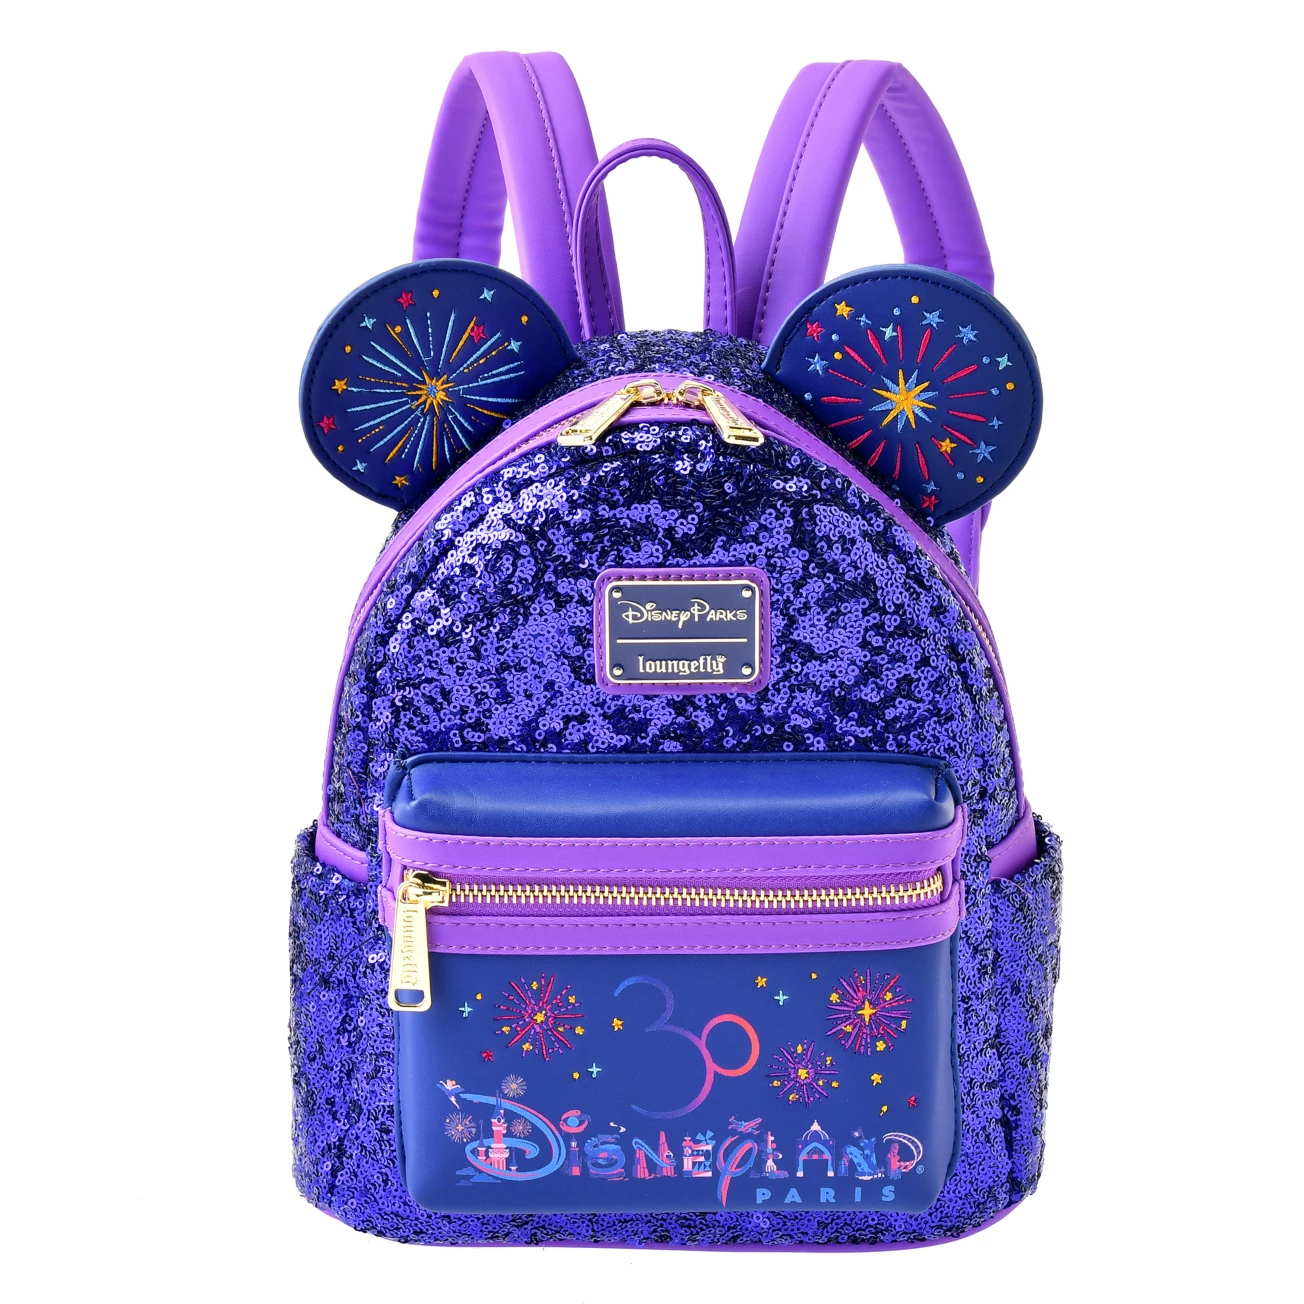 SDJ - Disneyland Paris 30th anniversary backpack